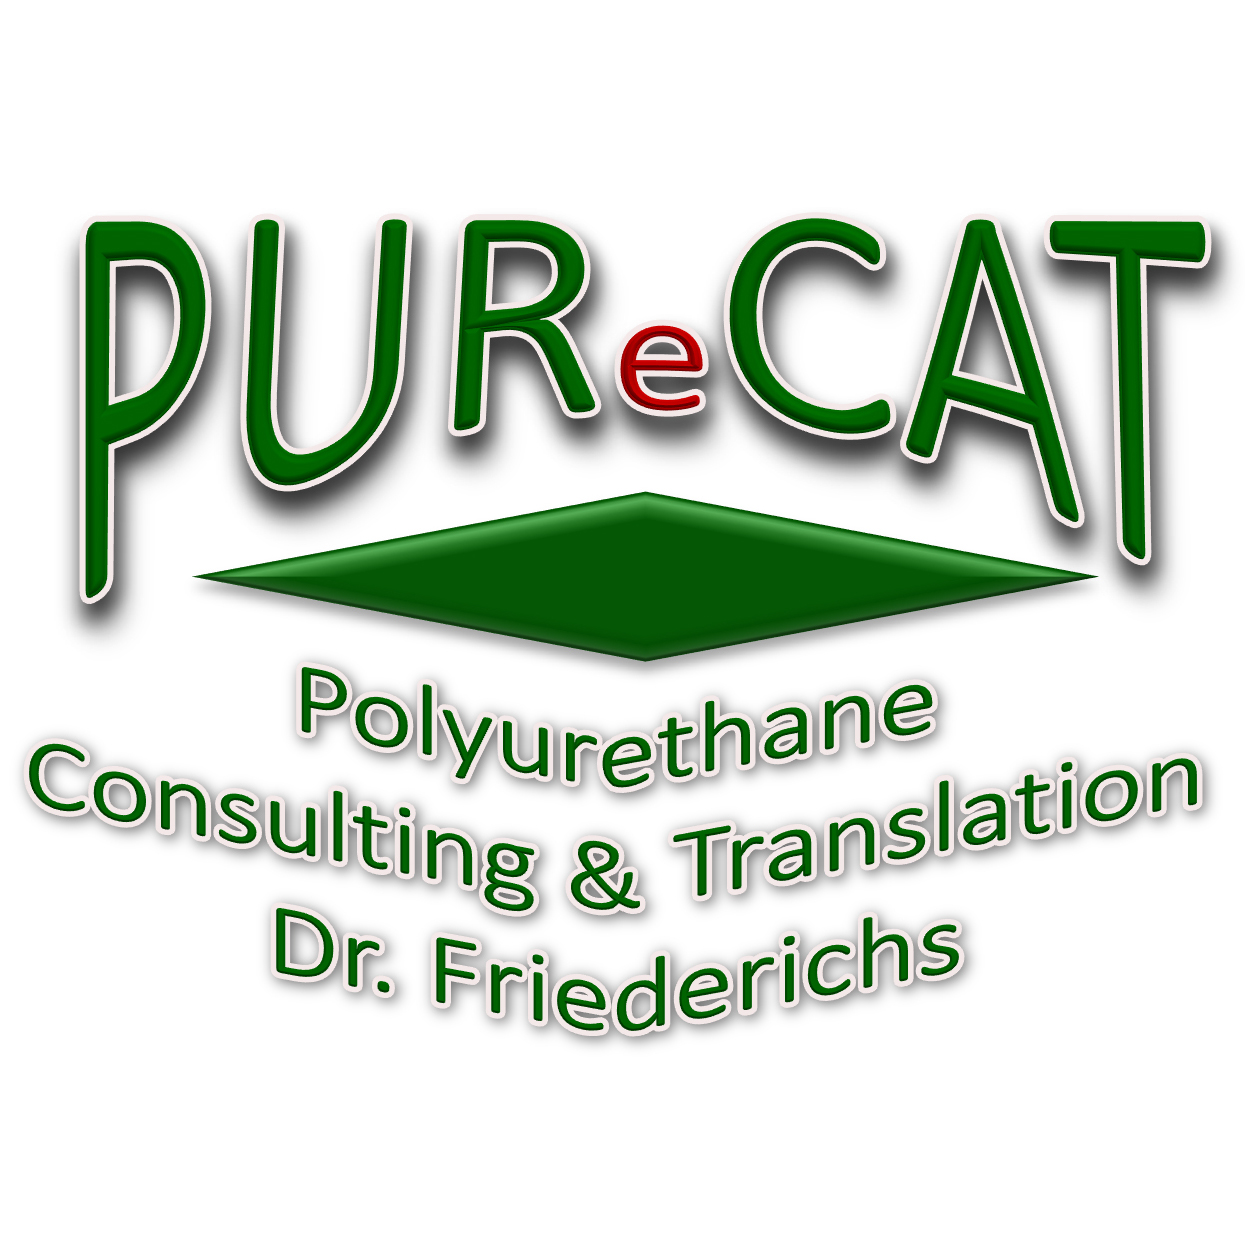 Polyurethane Consulting and Translation